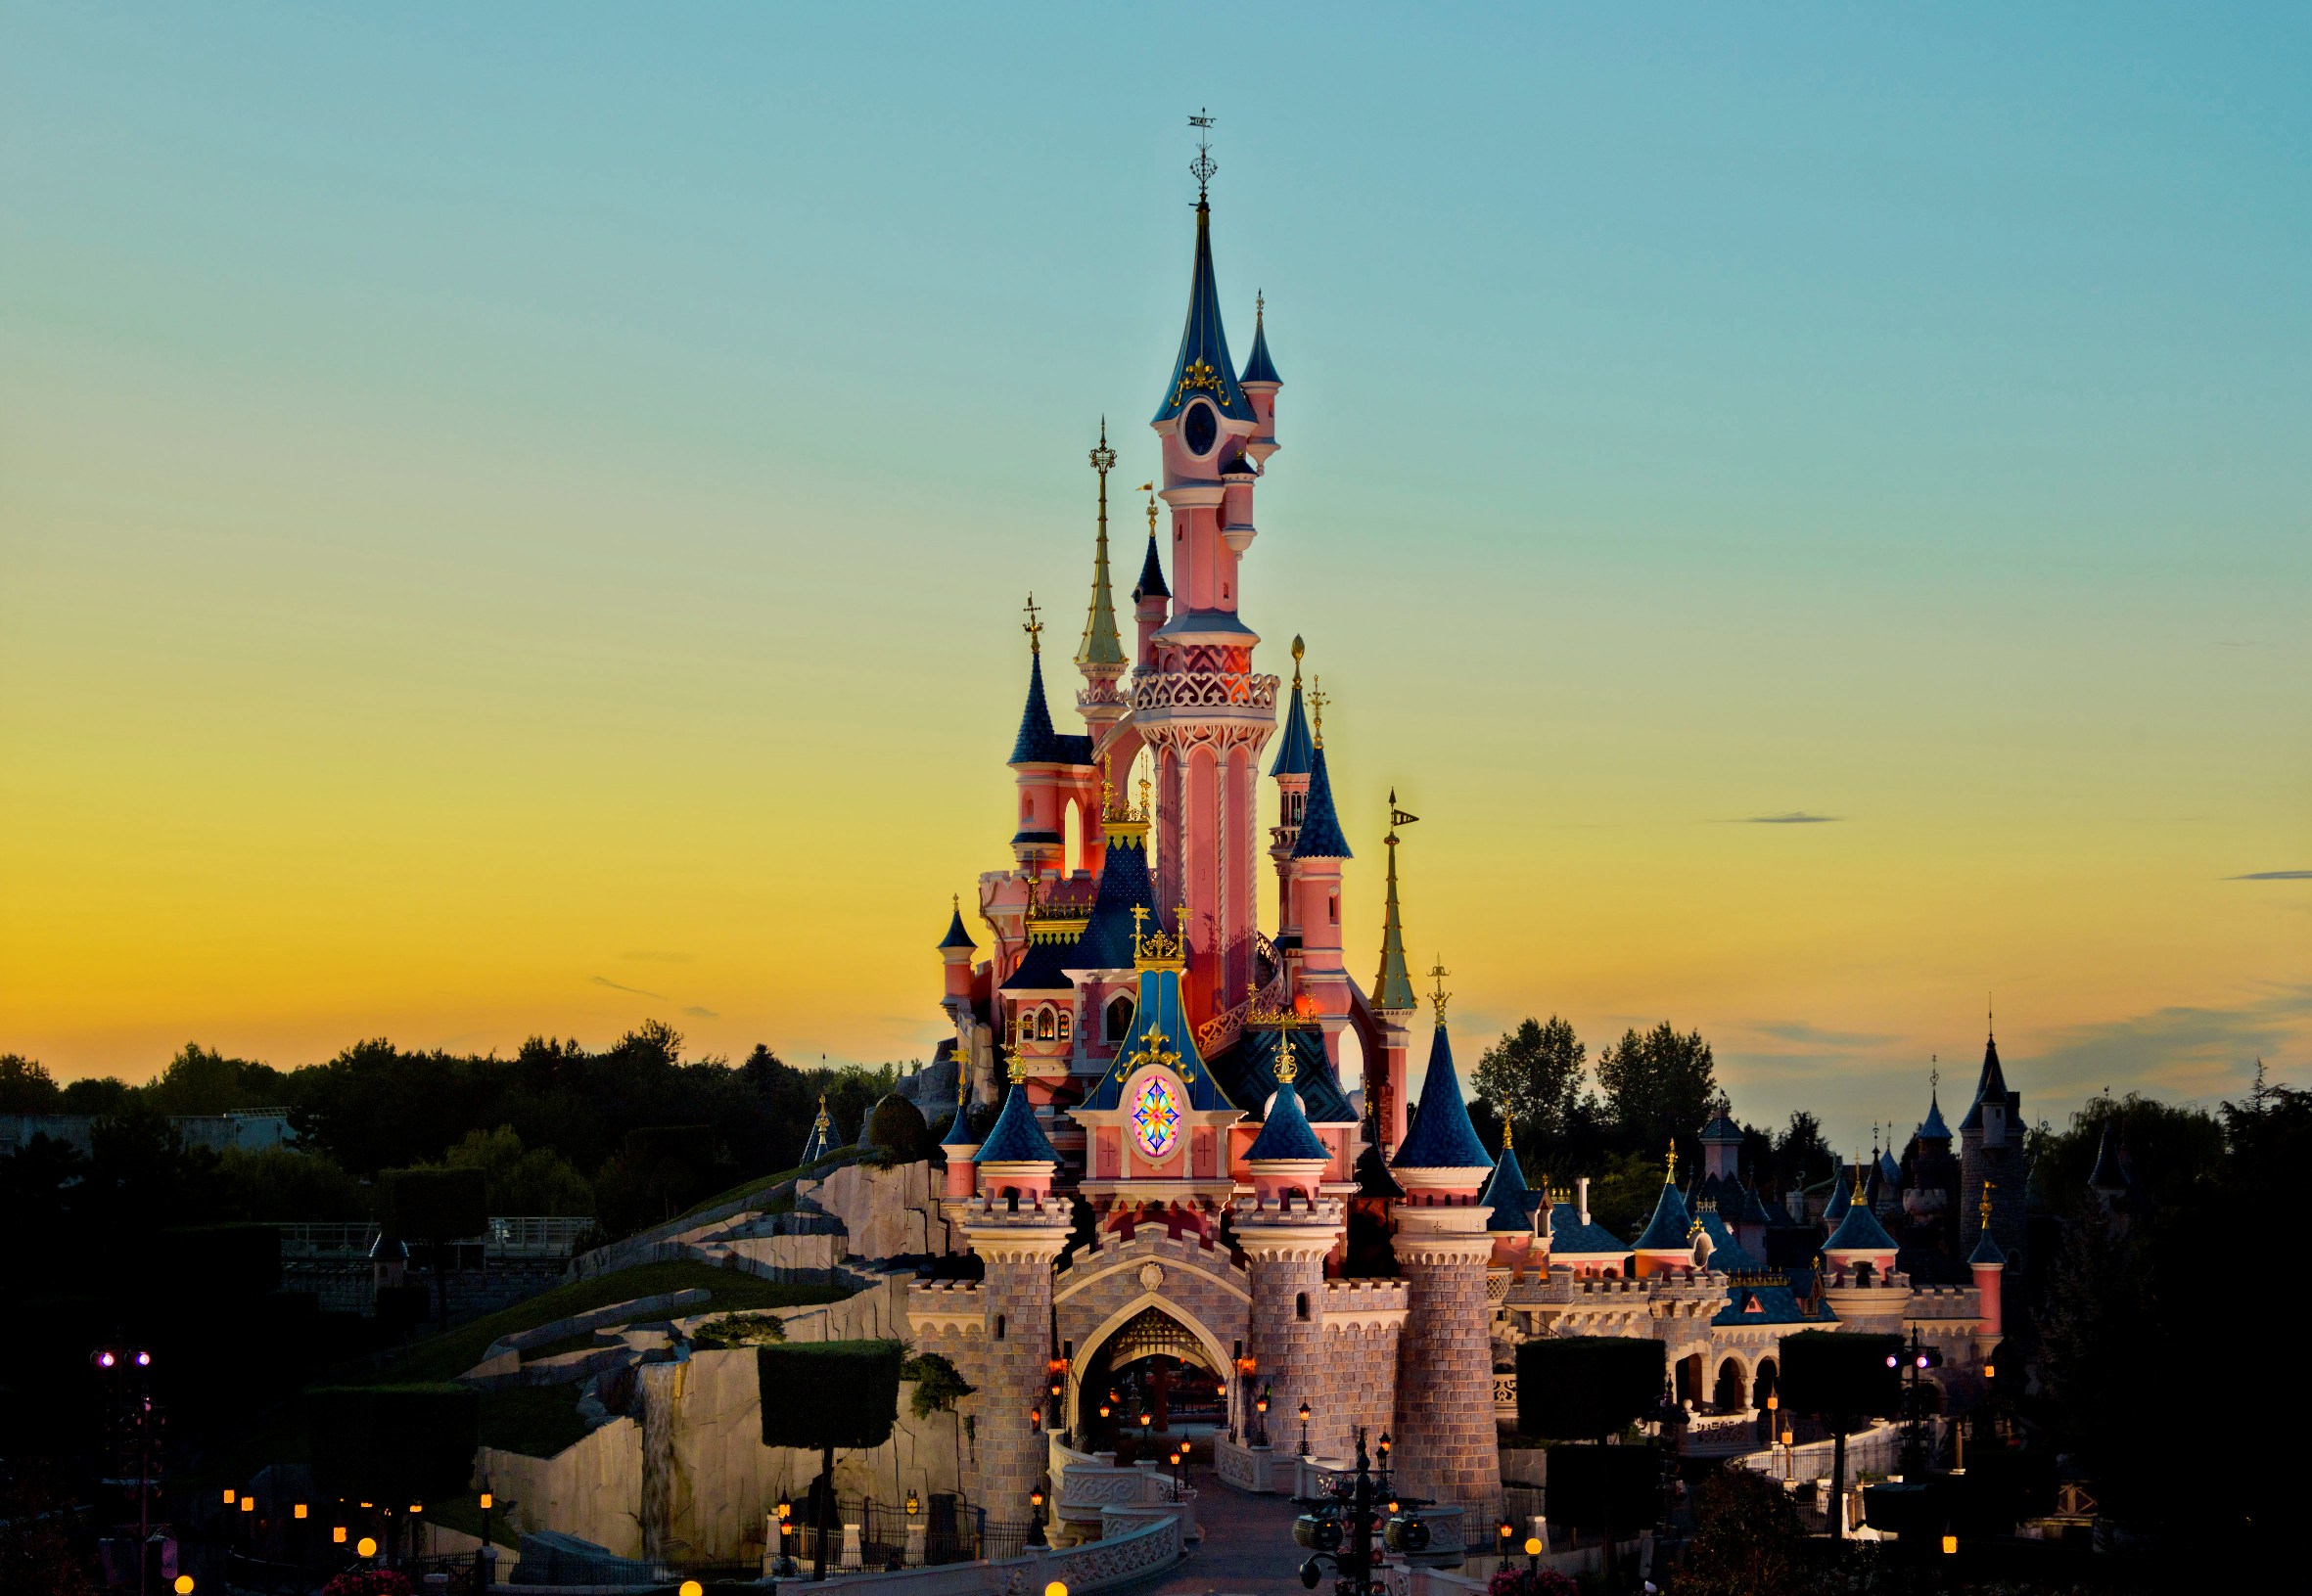 Sleeping Beauty Castle by night, January 25th 2020 : r/disneylandparis